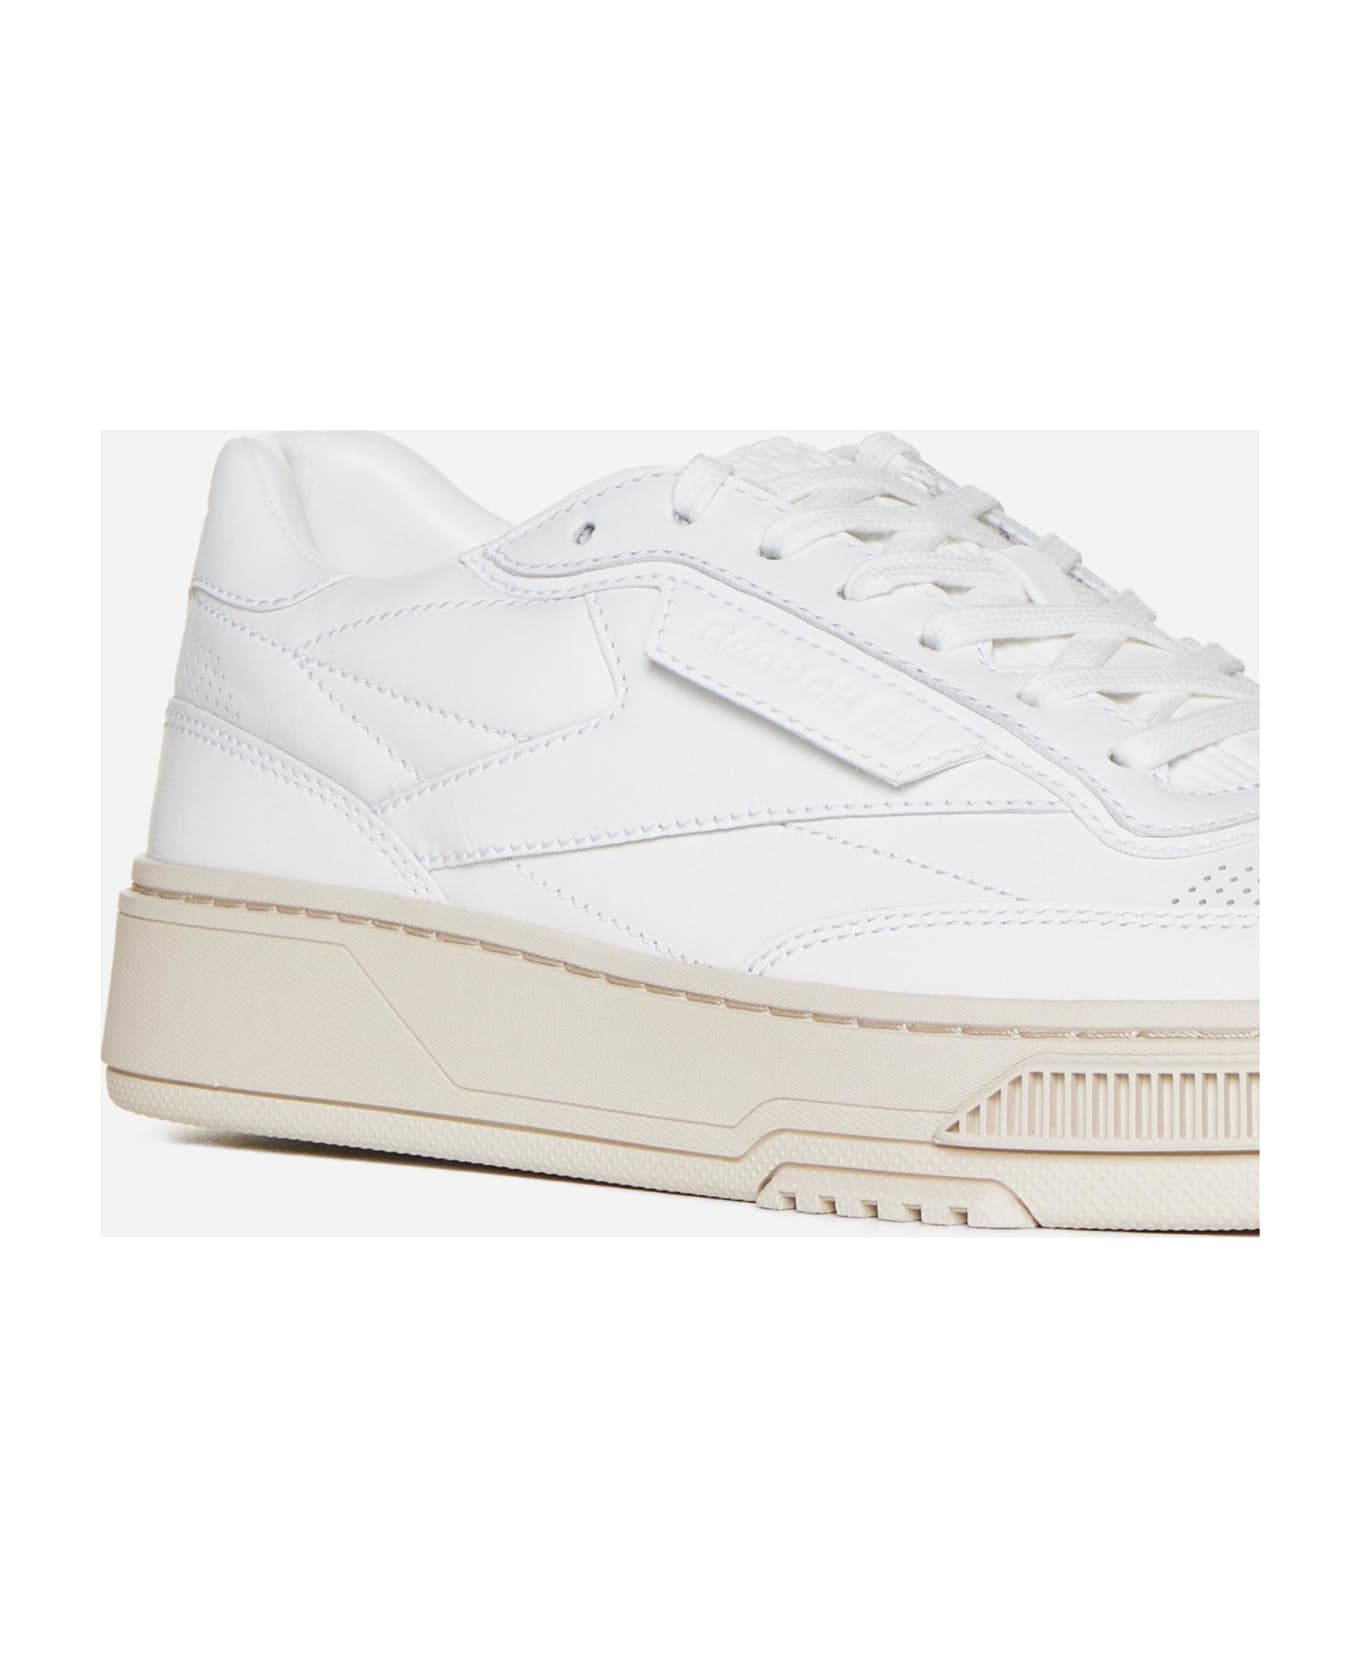 Reebok Club C Ltd Leather Sneakers - White Lthe